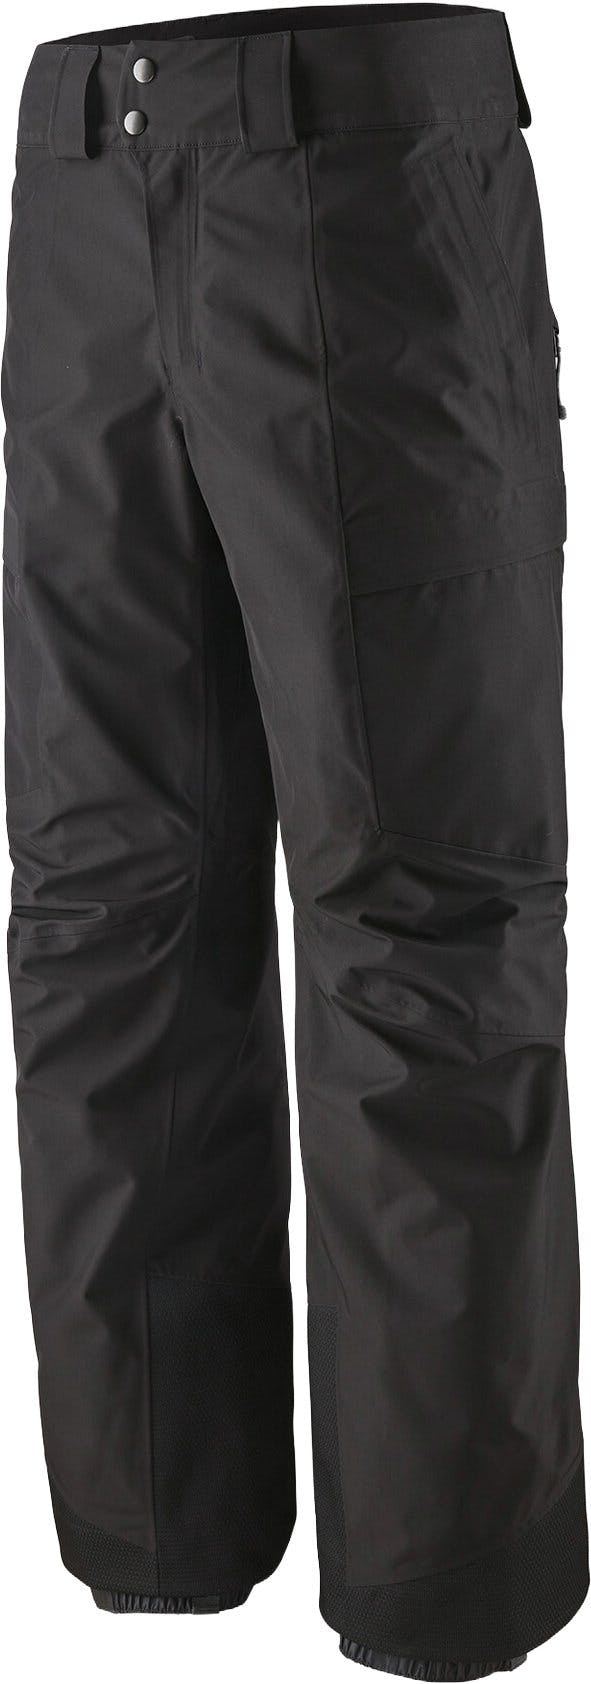 Product image for Storm Shift Regular Fit Pants - Men's